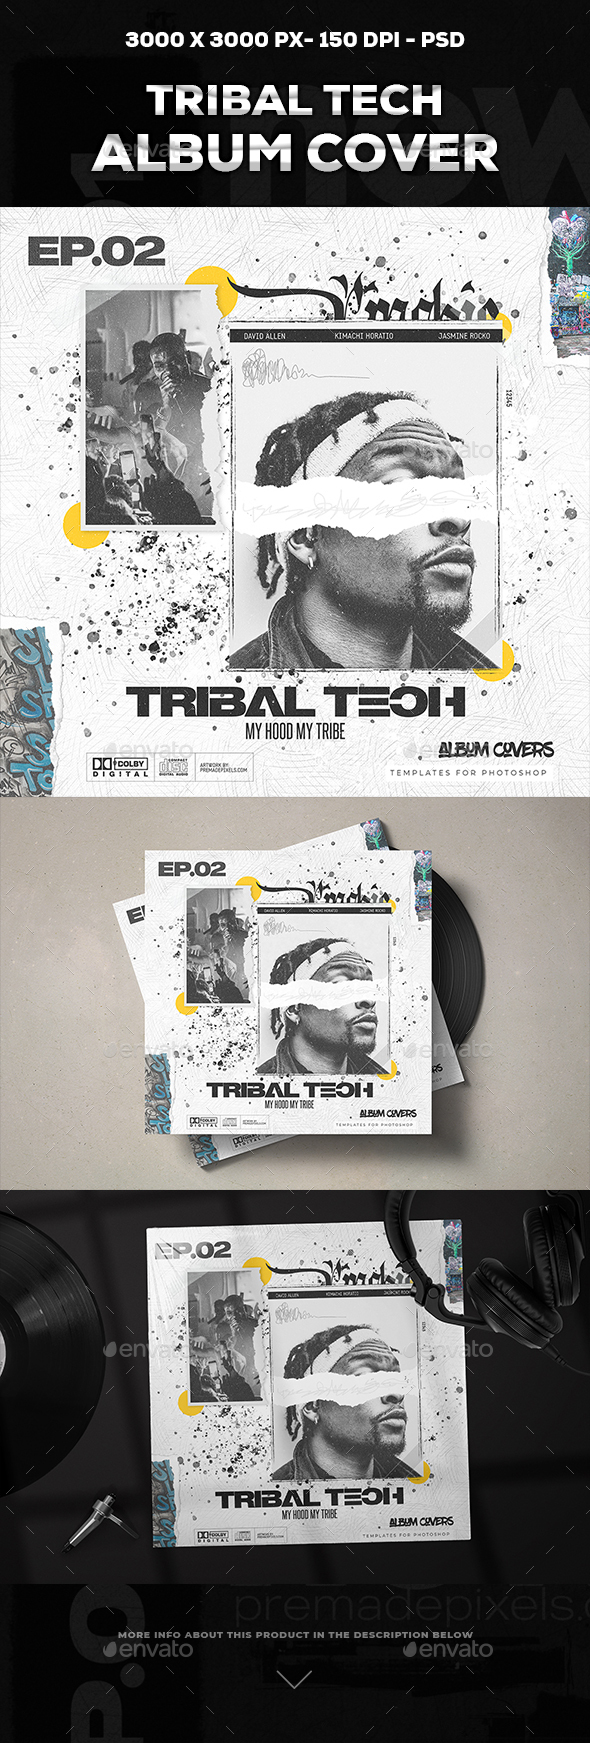 [DOWNLOAD]Tribal Tech Album Cover